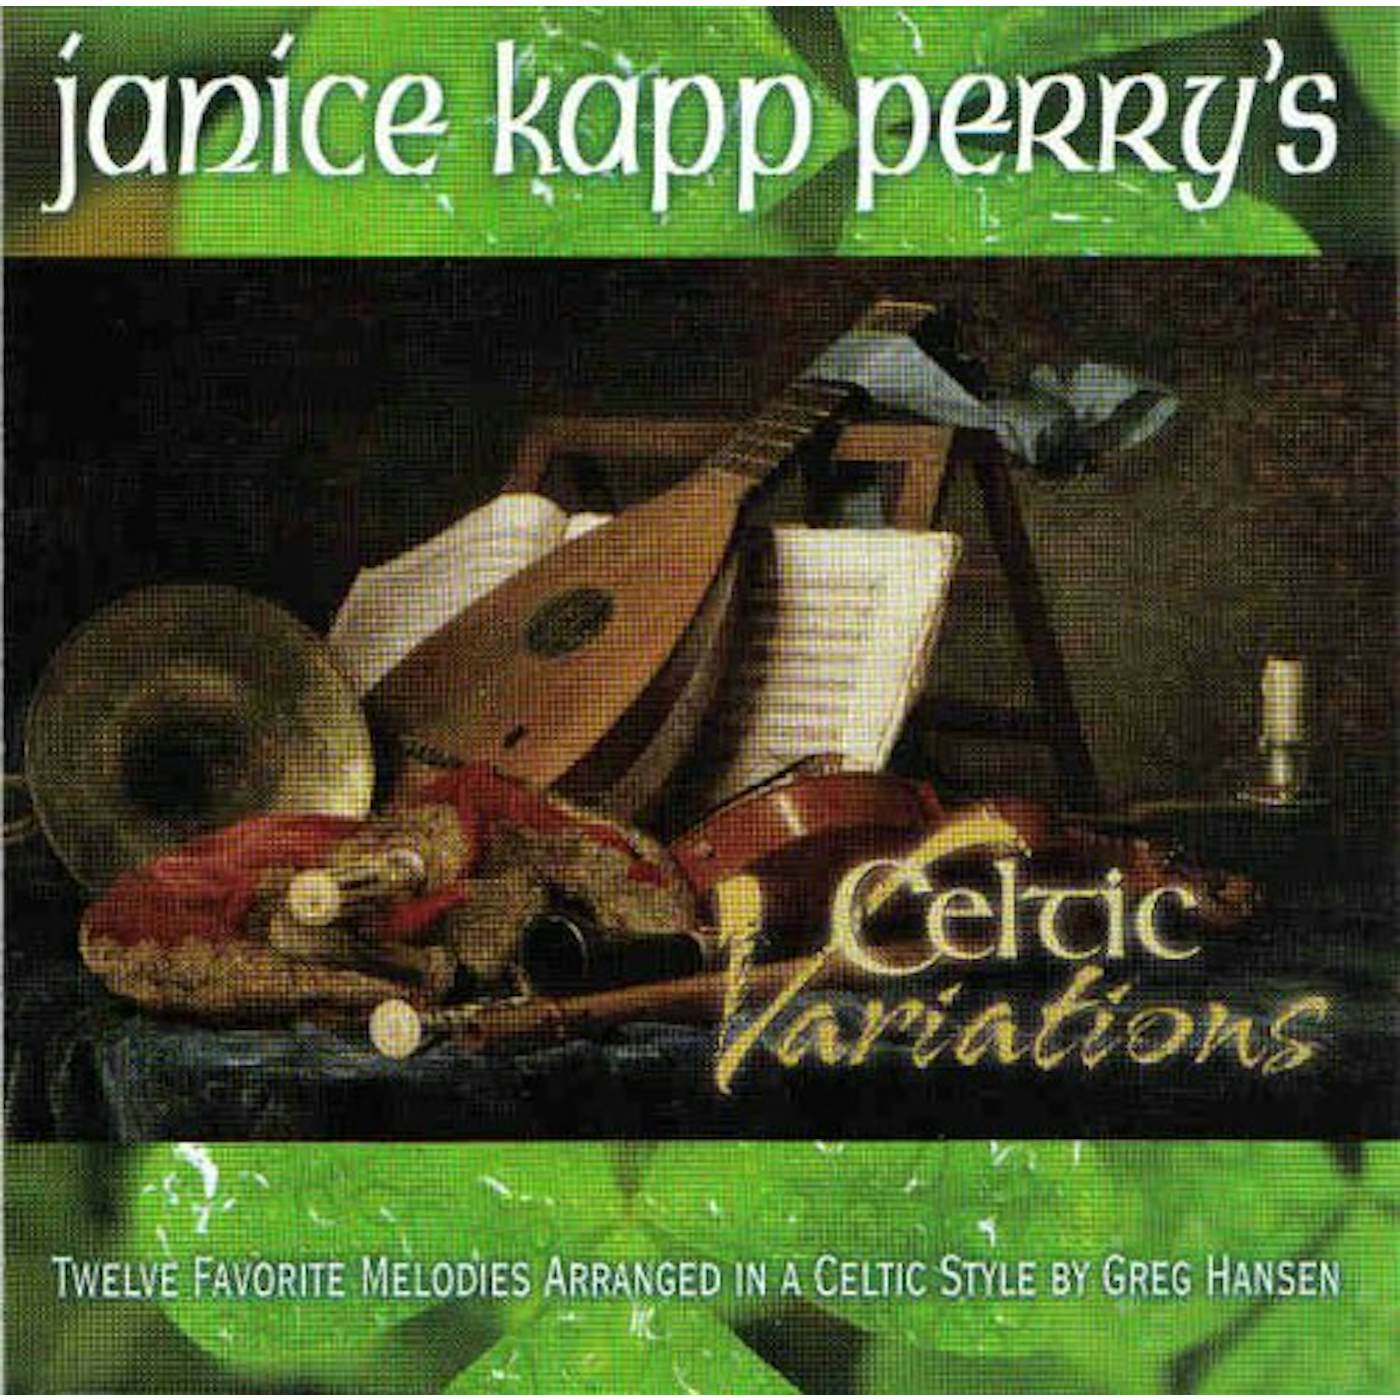 JANICE KAPP PERRY'S CELTIC VARIATIONS CD